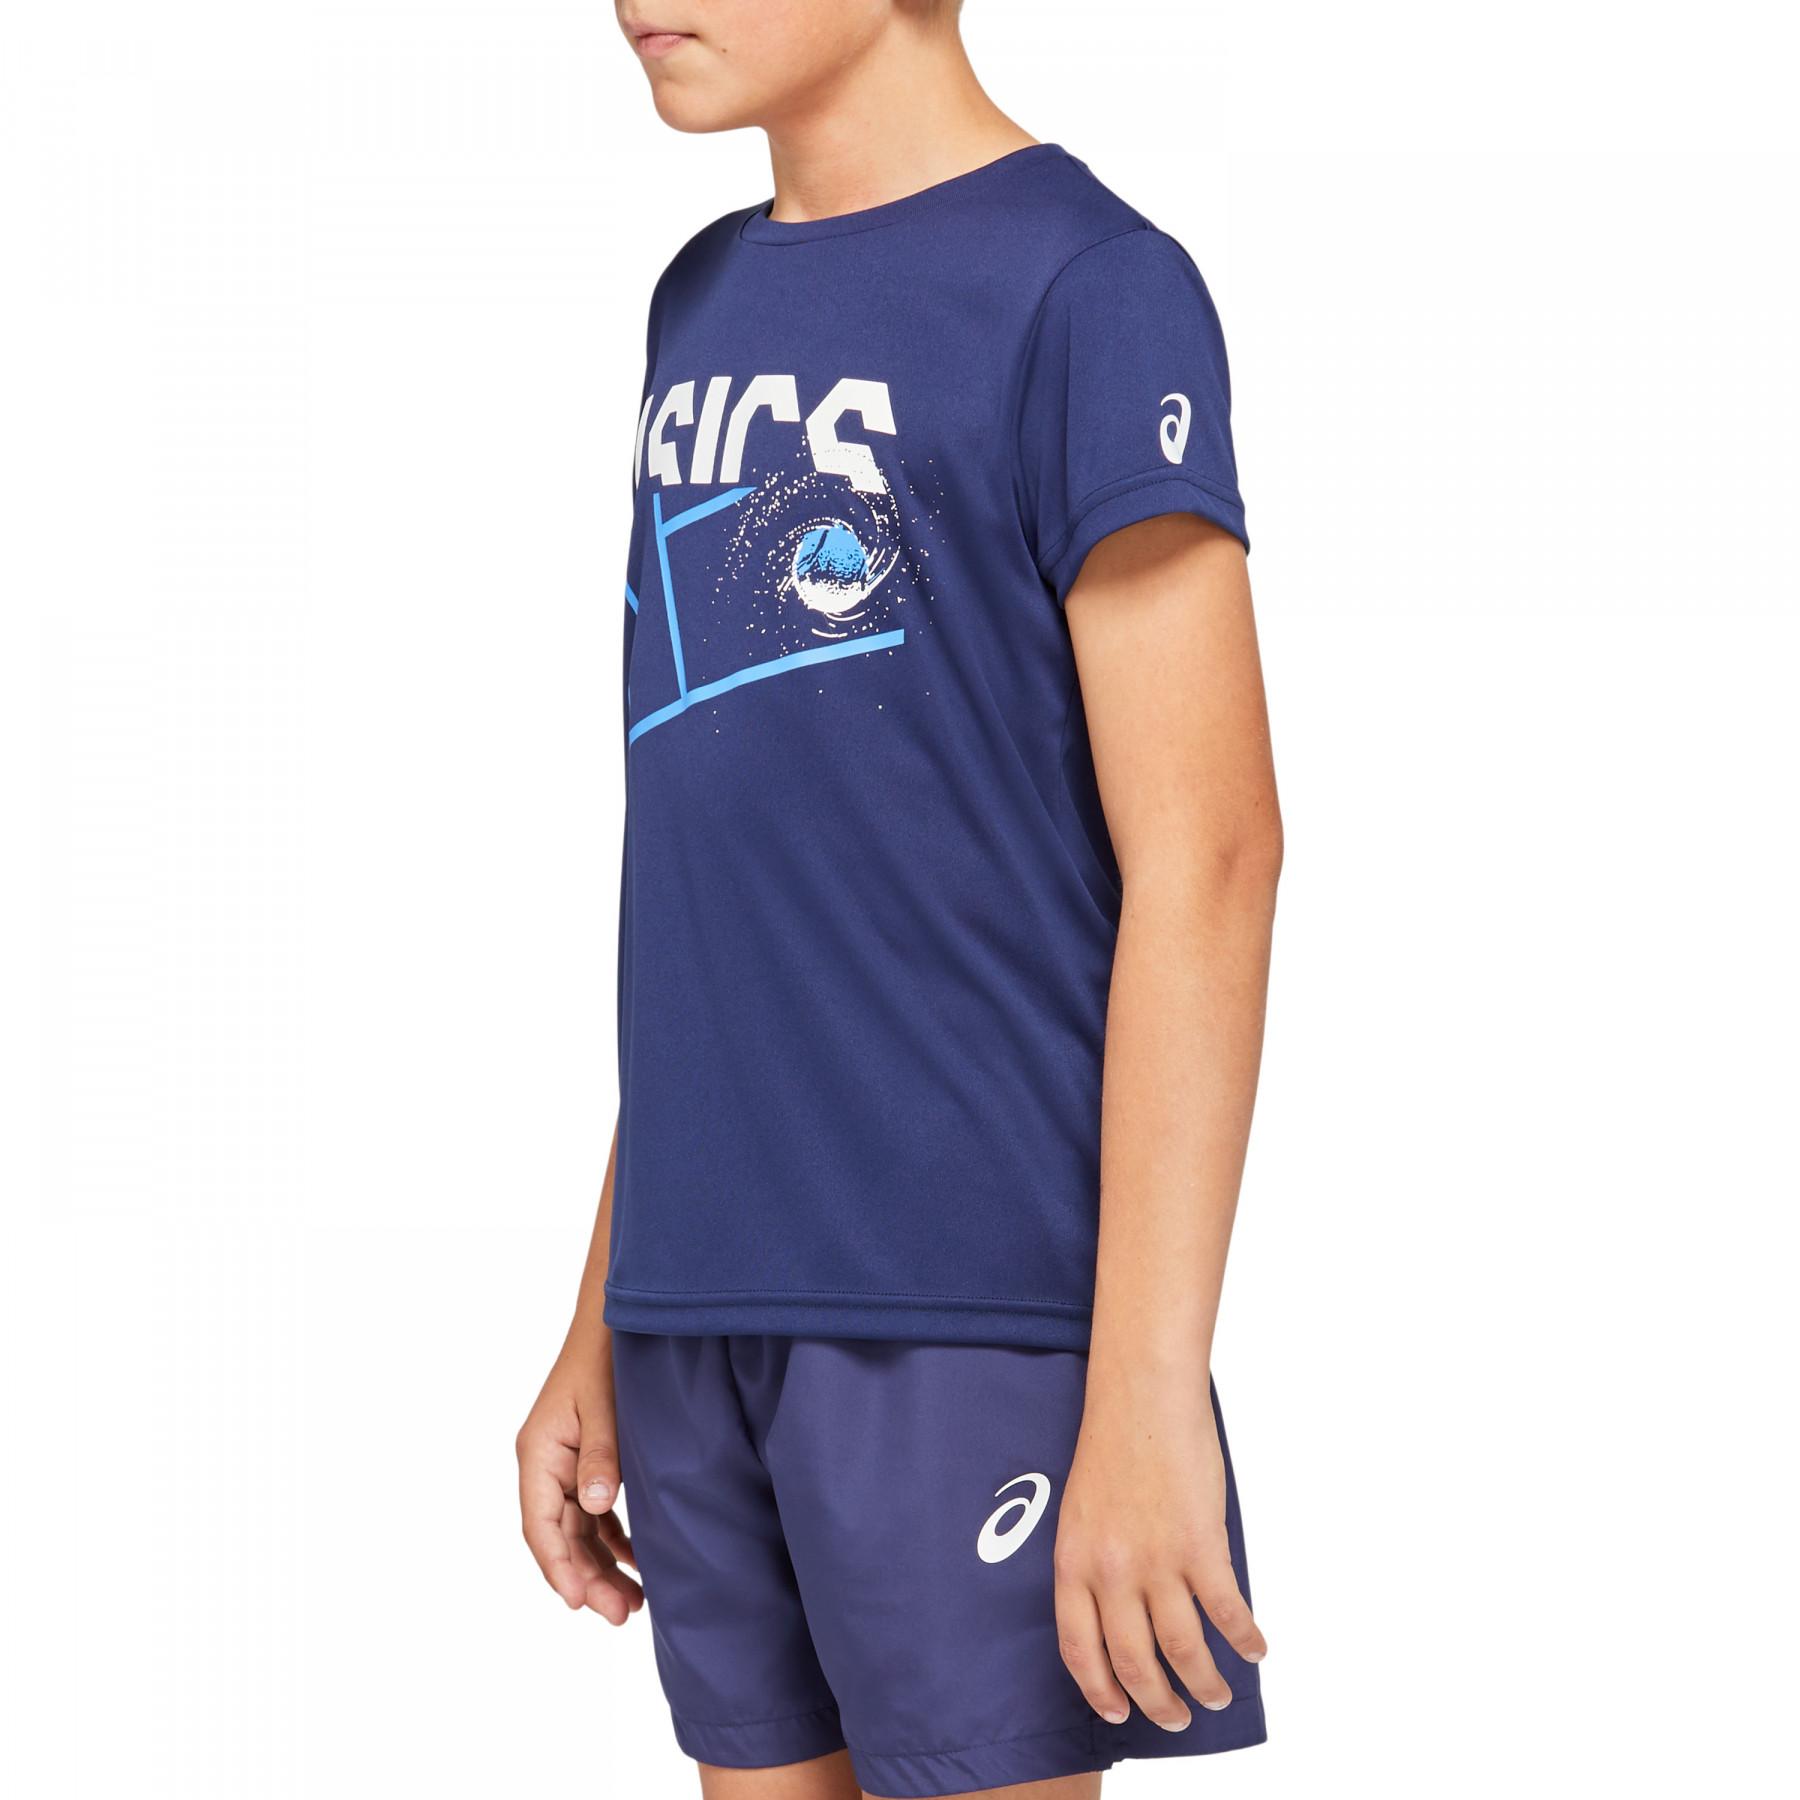 Kinder-T-shirt Asics Tennis GPX